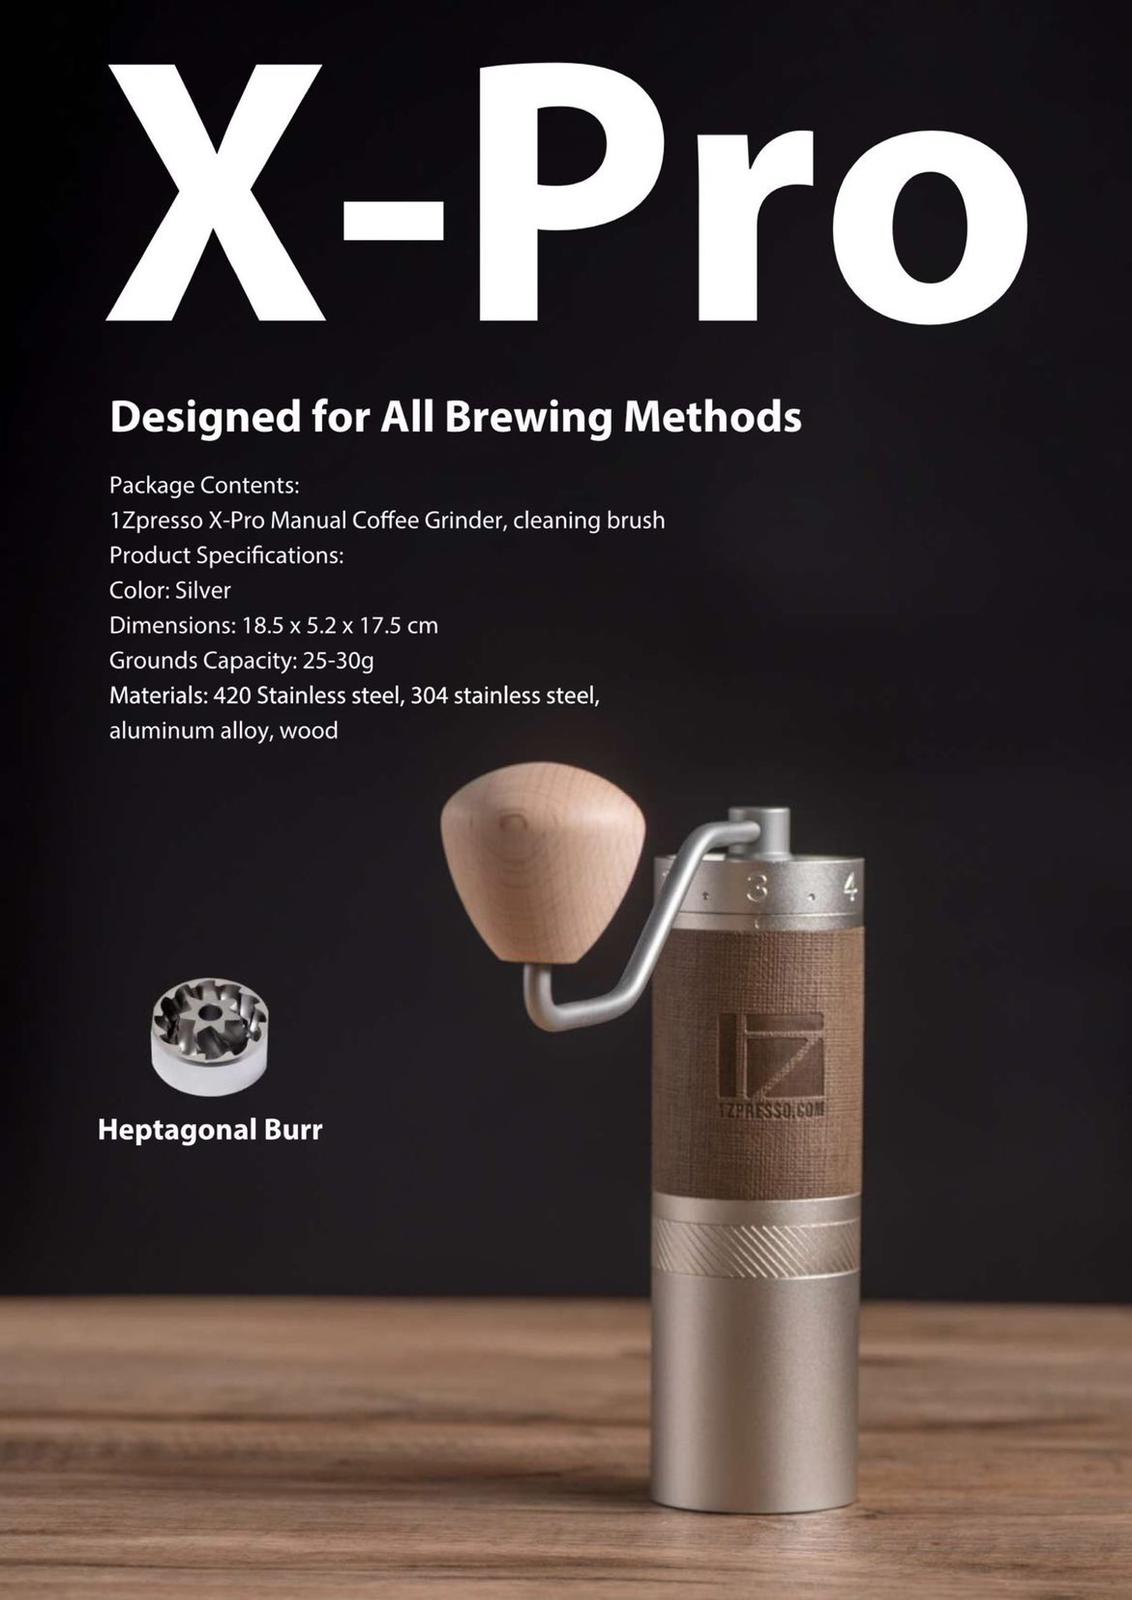 1Zpresso X-Pro Manual Grinder